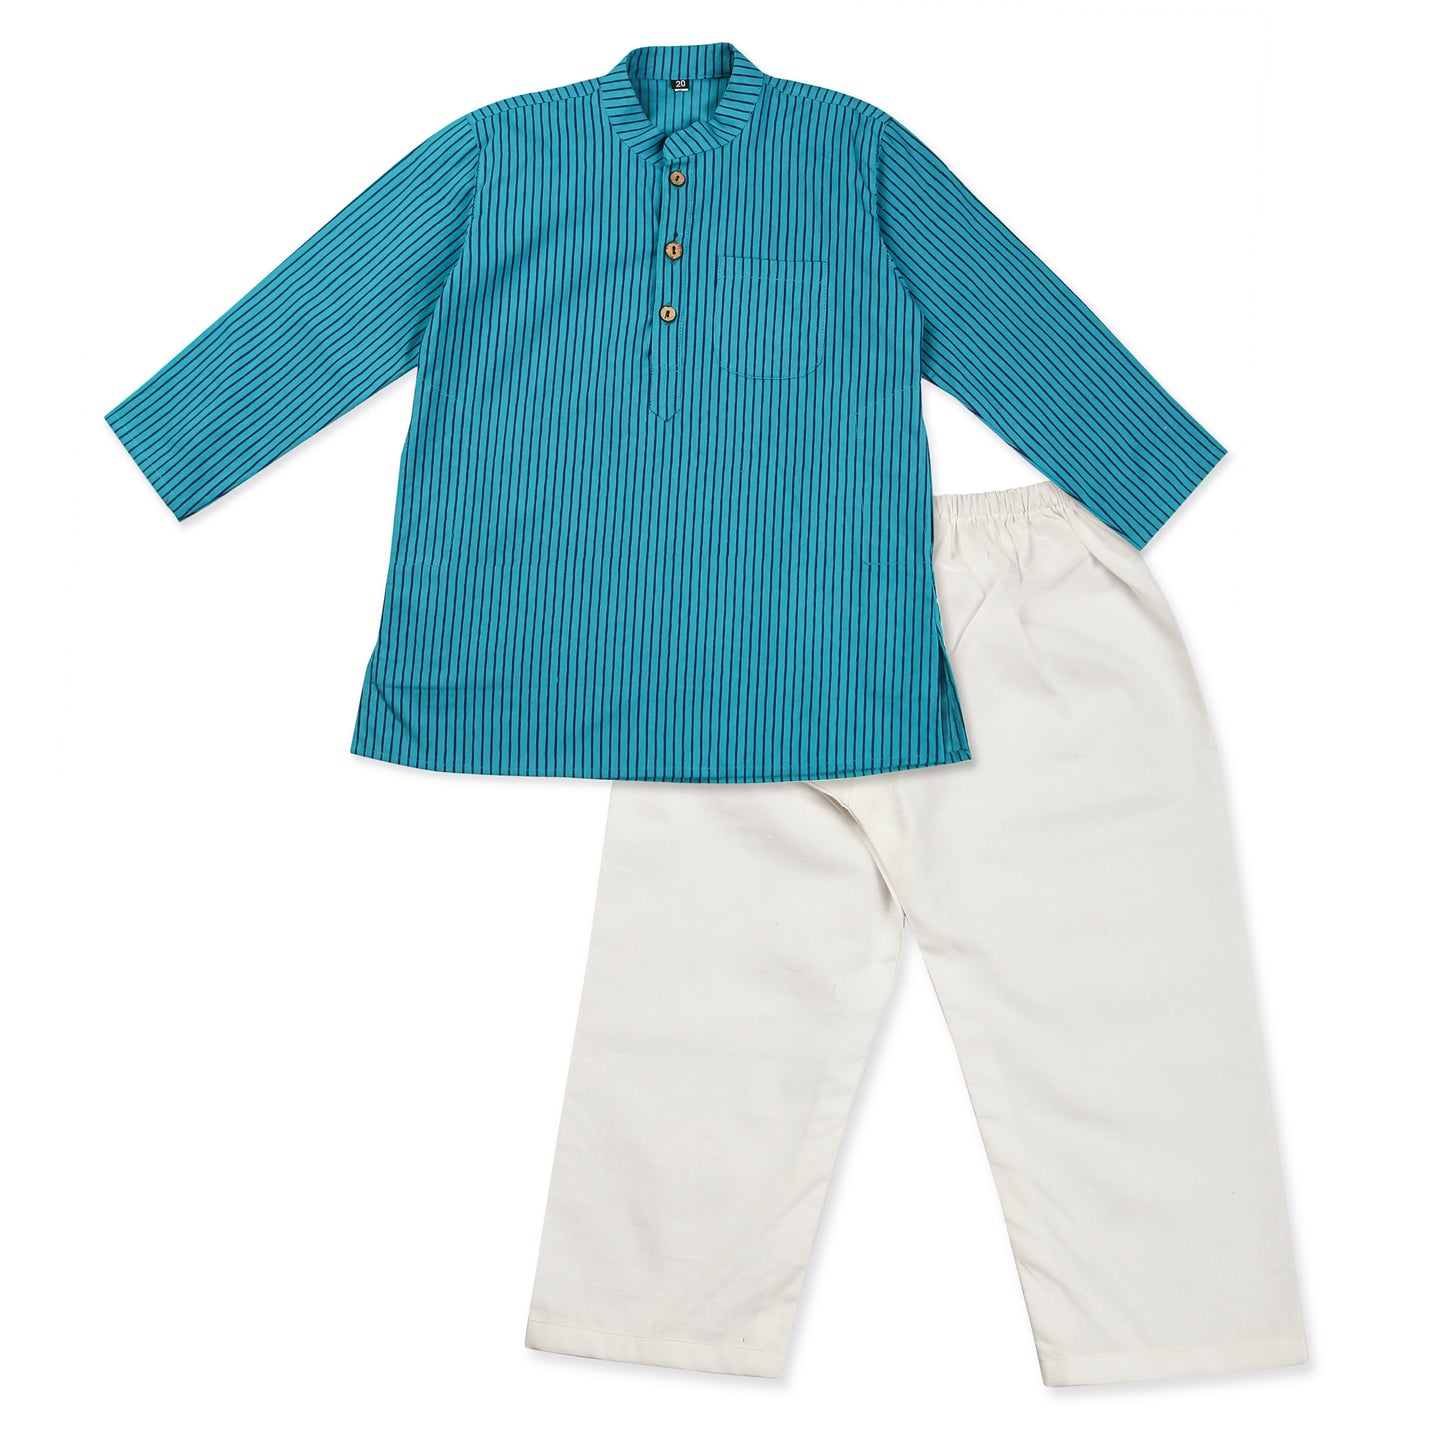 Sky Blue Kurta Pajama for Boys, Ages 0-16 Years, Cotton, Striped